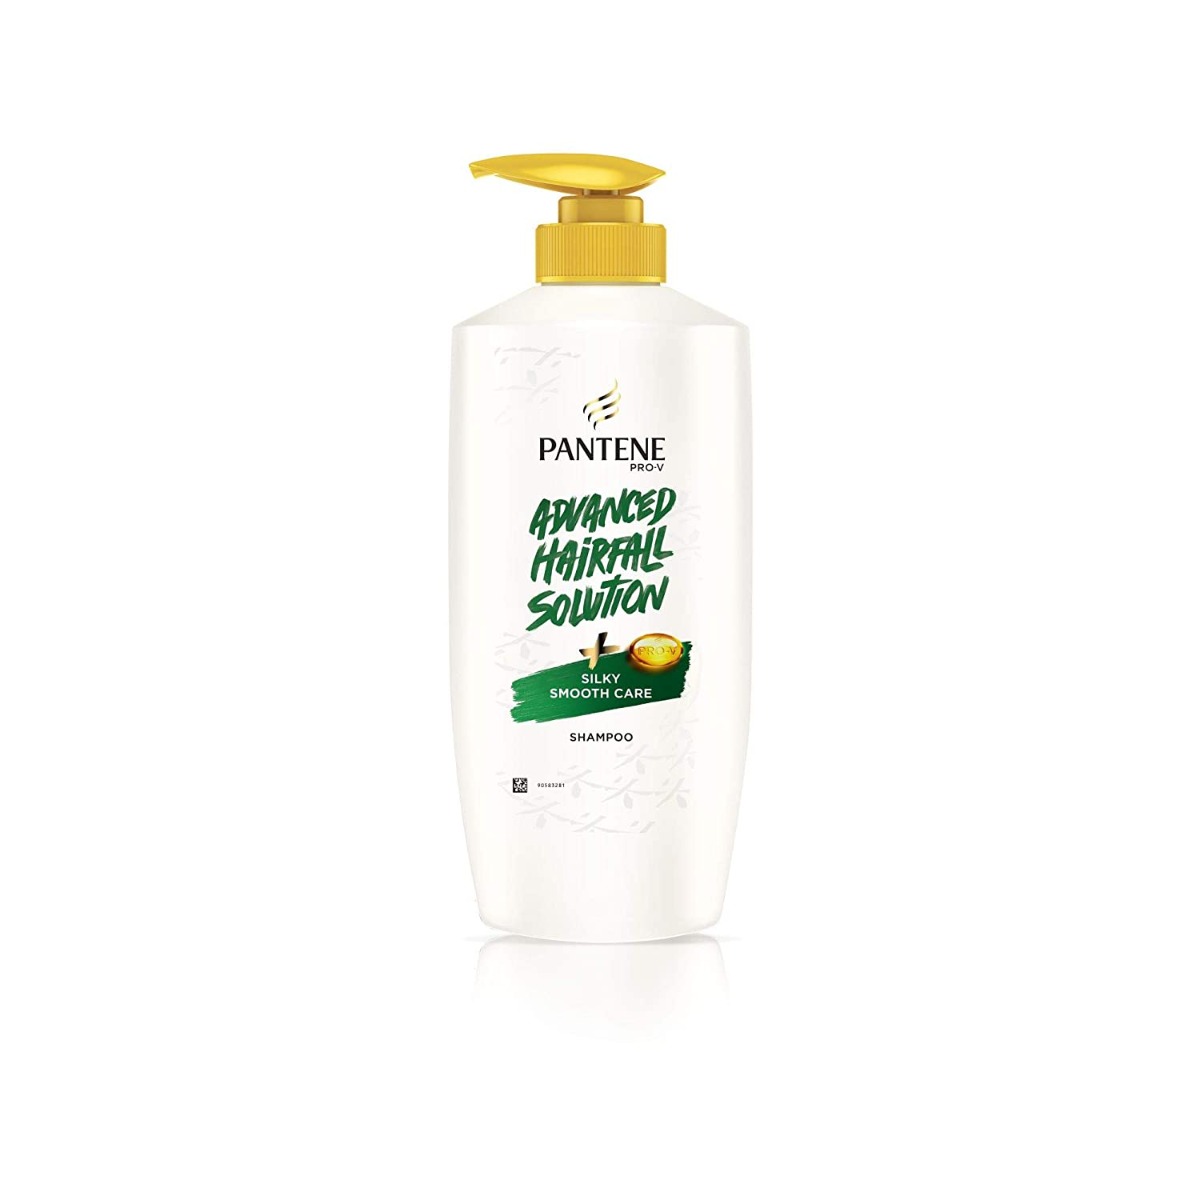 Pantene Advanced Hairfall Solution, Silky Smooth Care Shampoo, 650ml Buy 1 Get 1-0